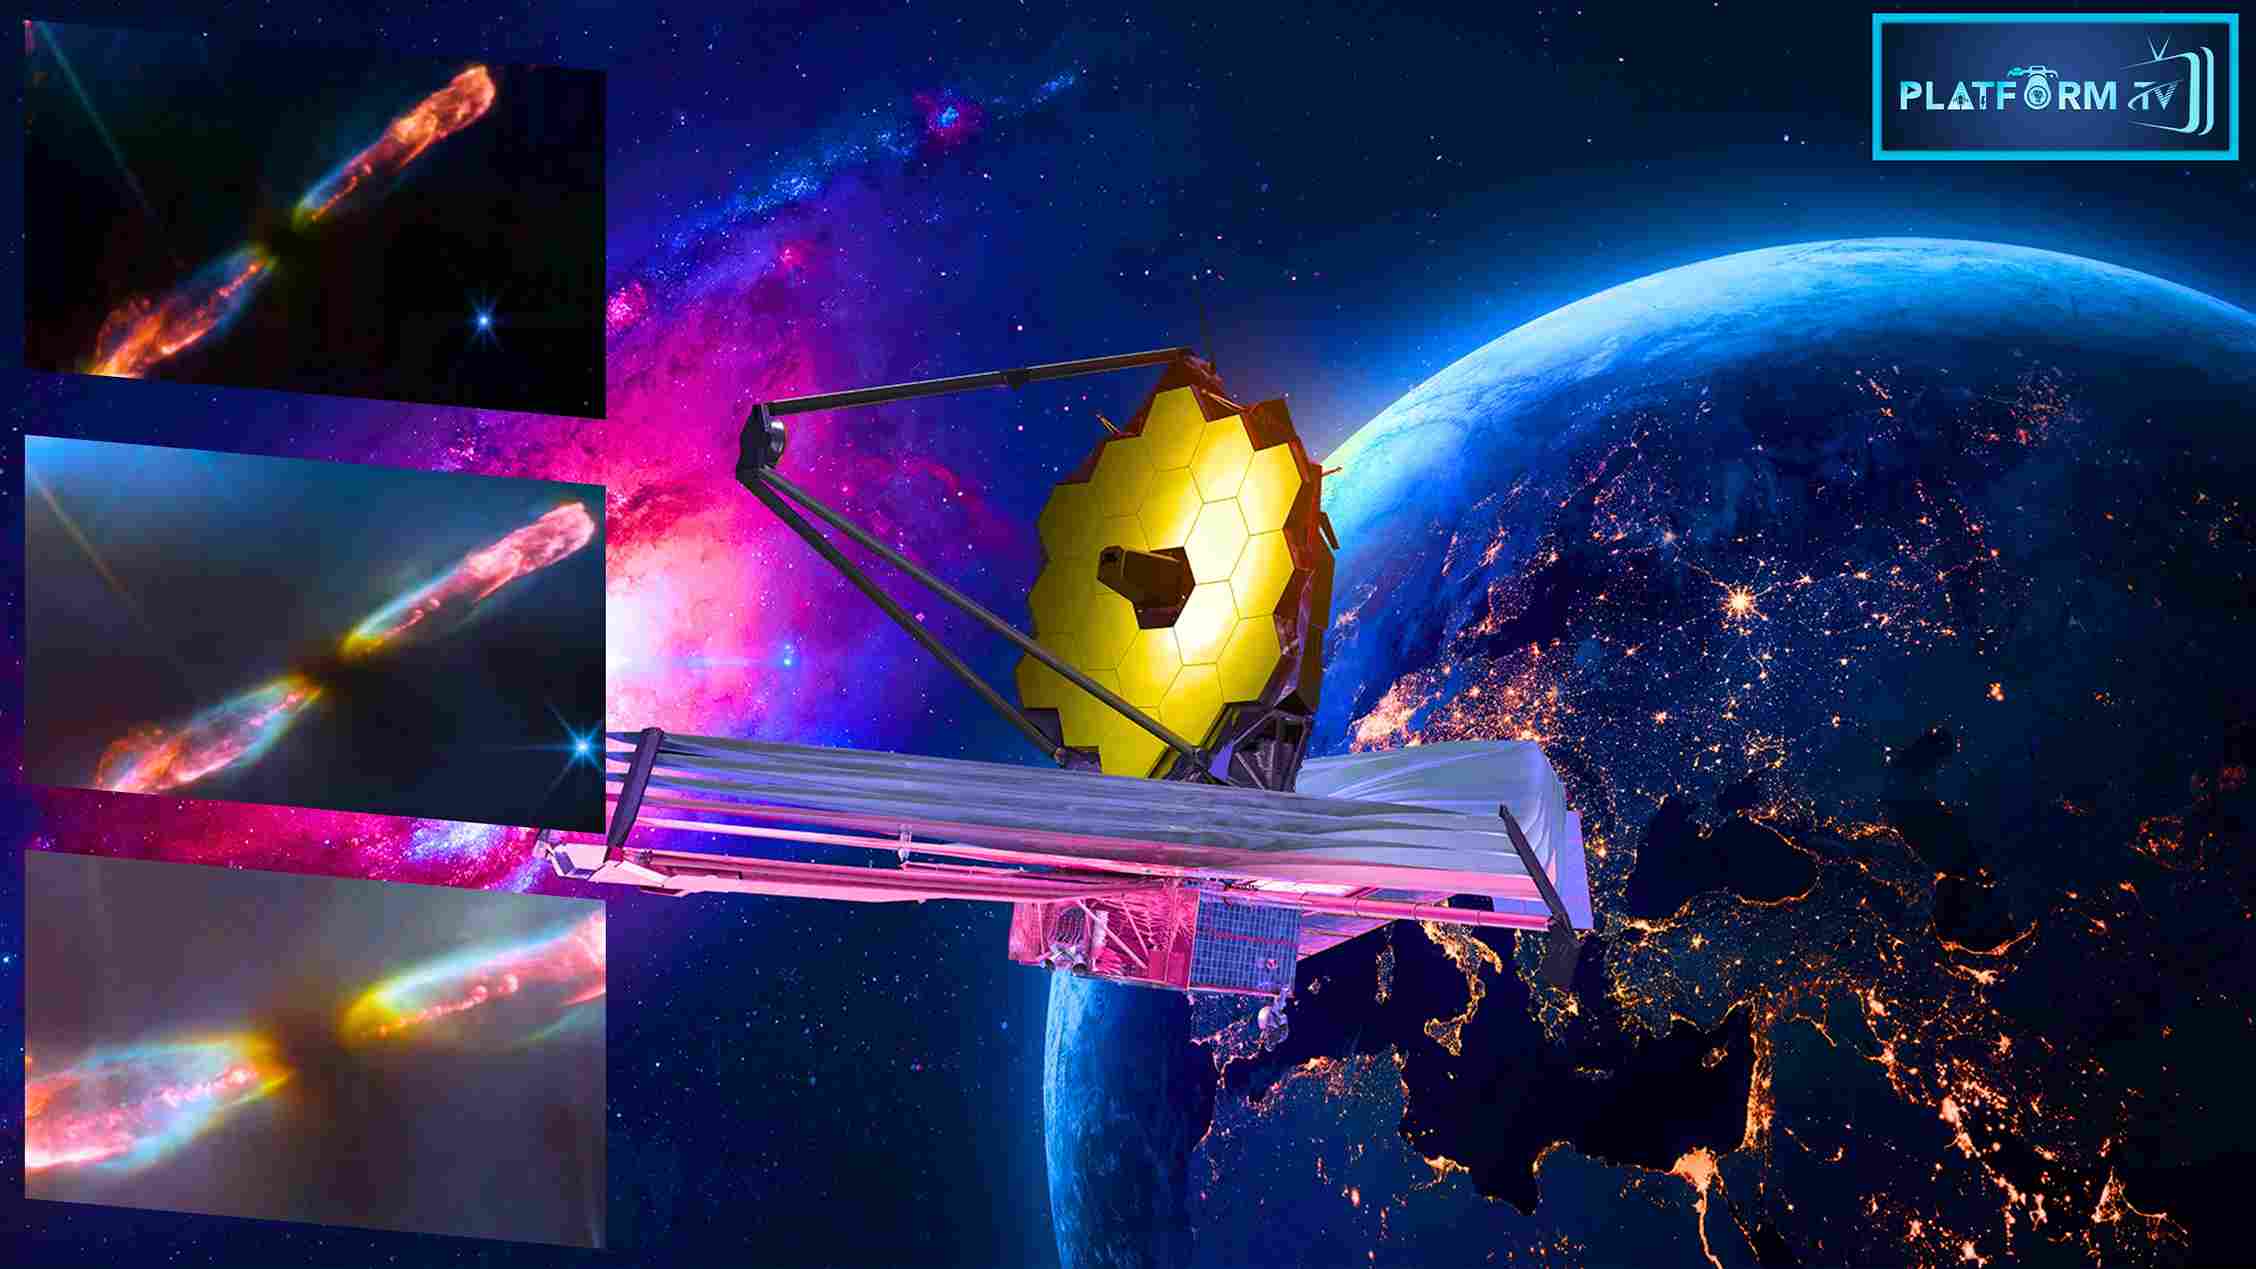 NASA's James Webb Telescope - Platform Tamil